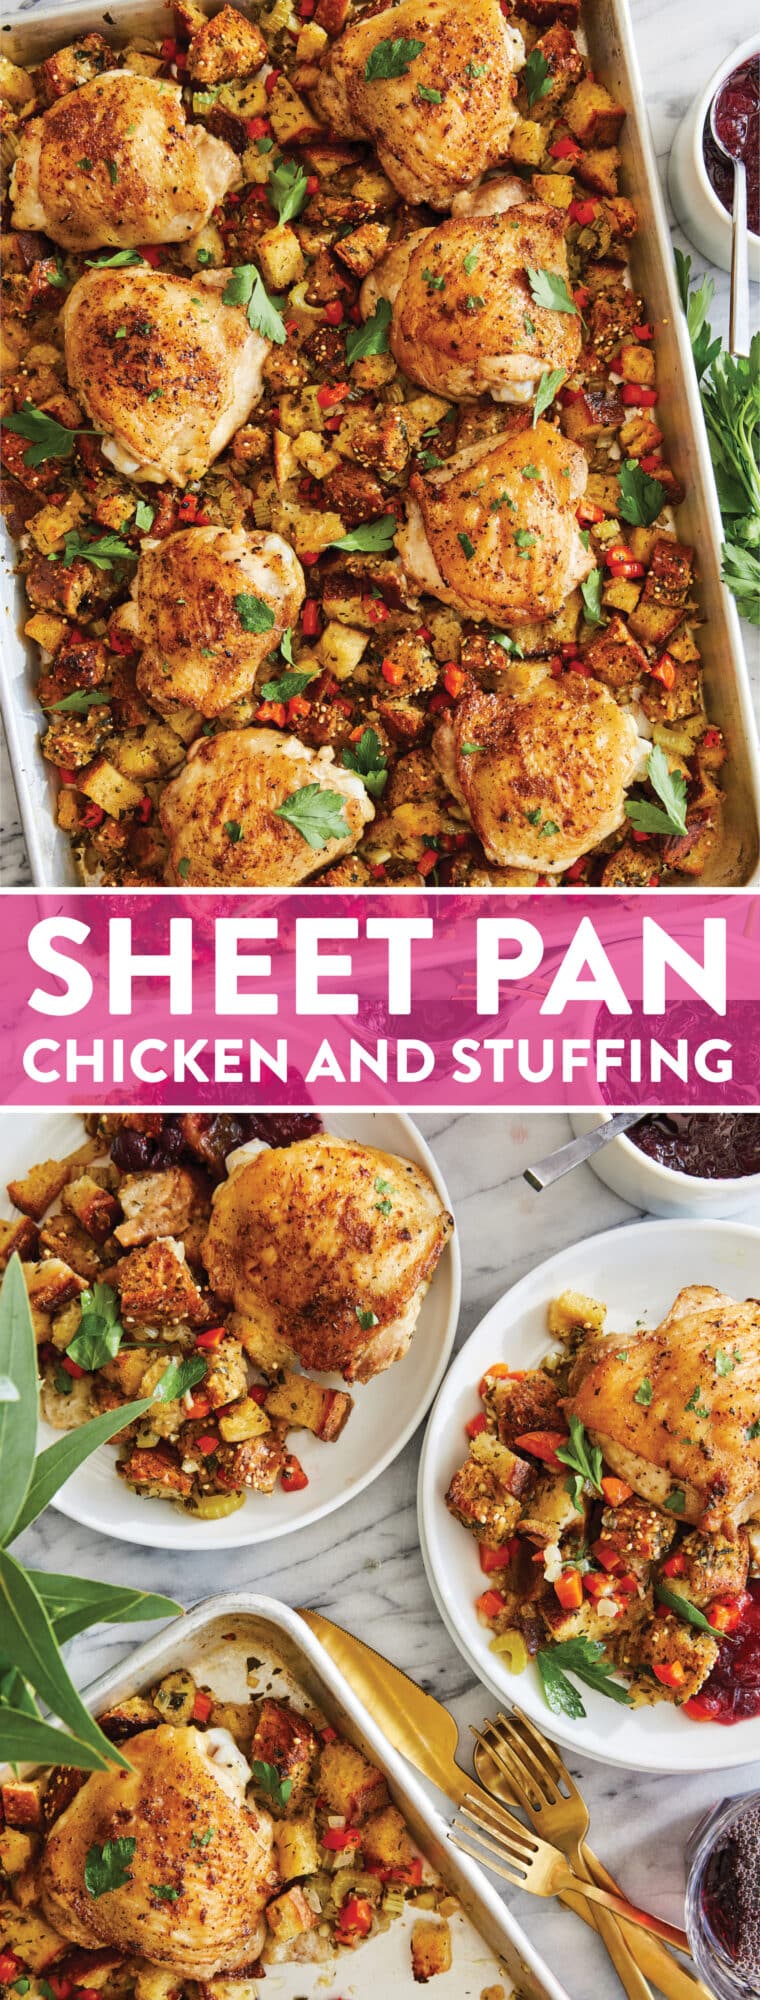 Sheet Pan Chicken and Stuffing